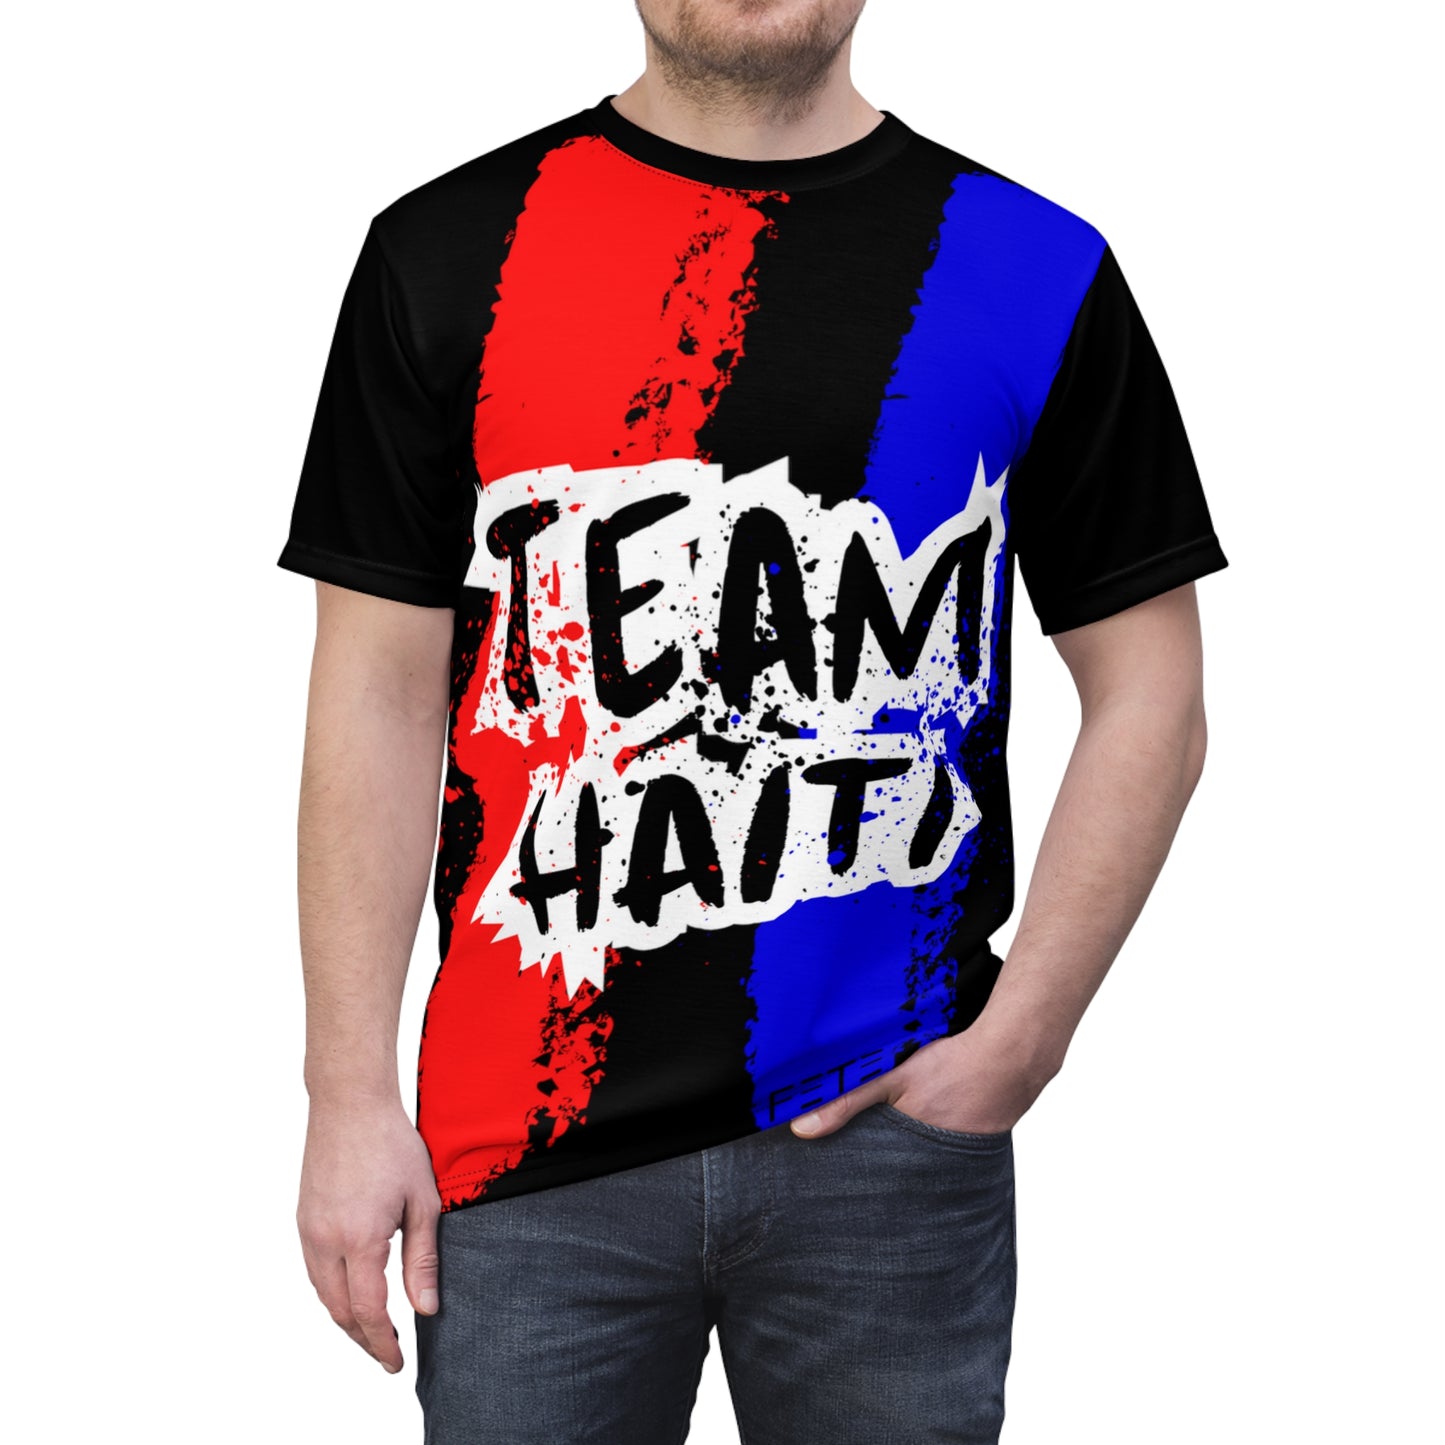 Team Haiti Premium Lightweight Tee